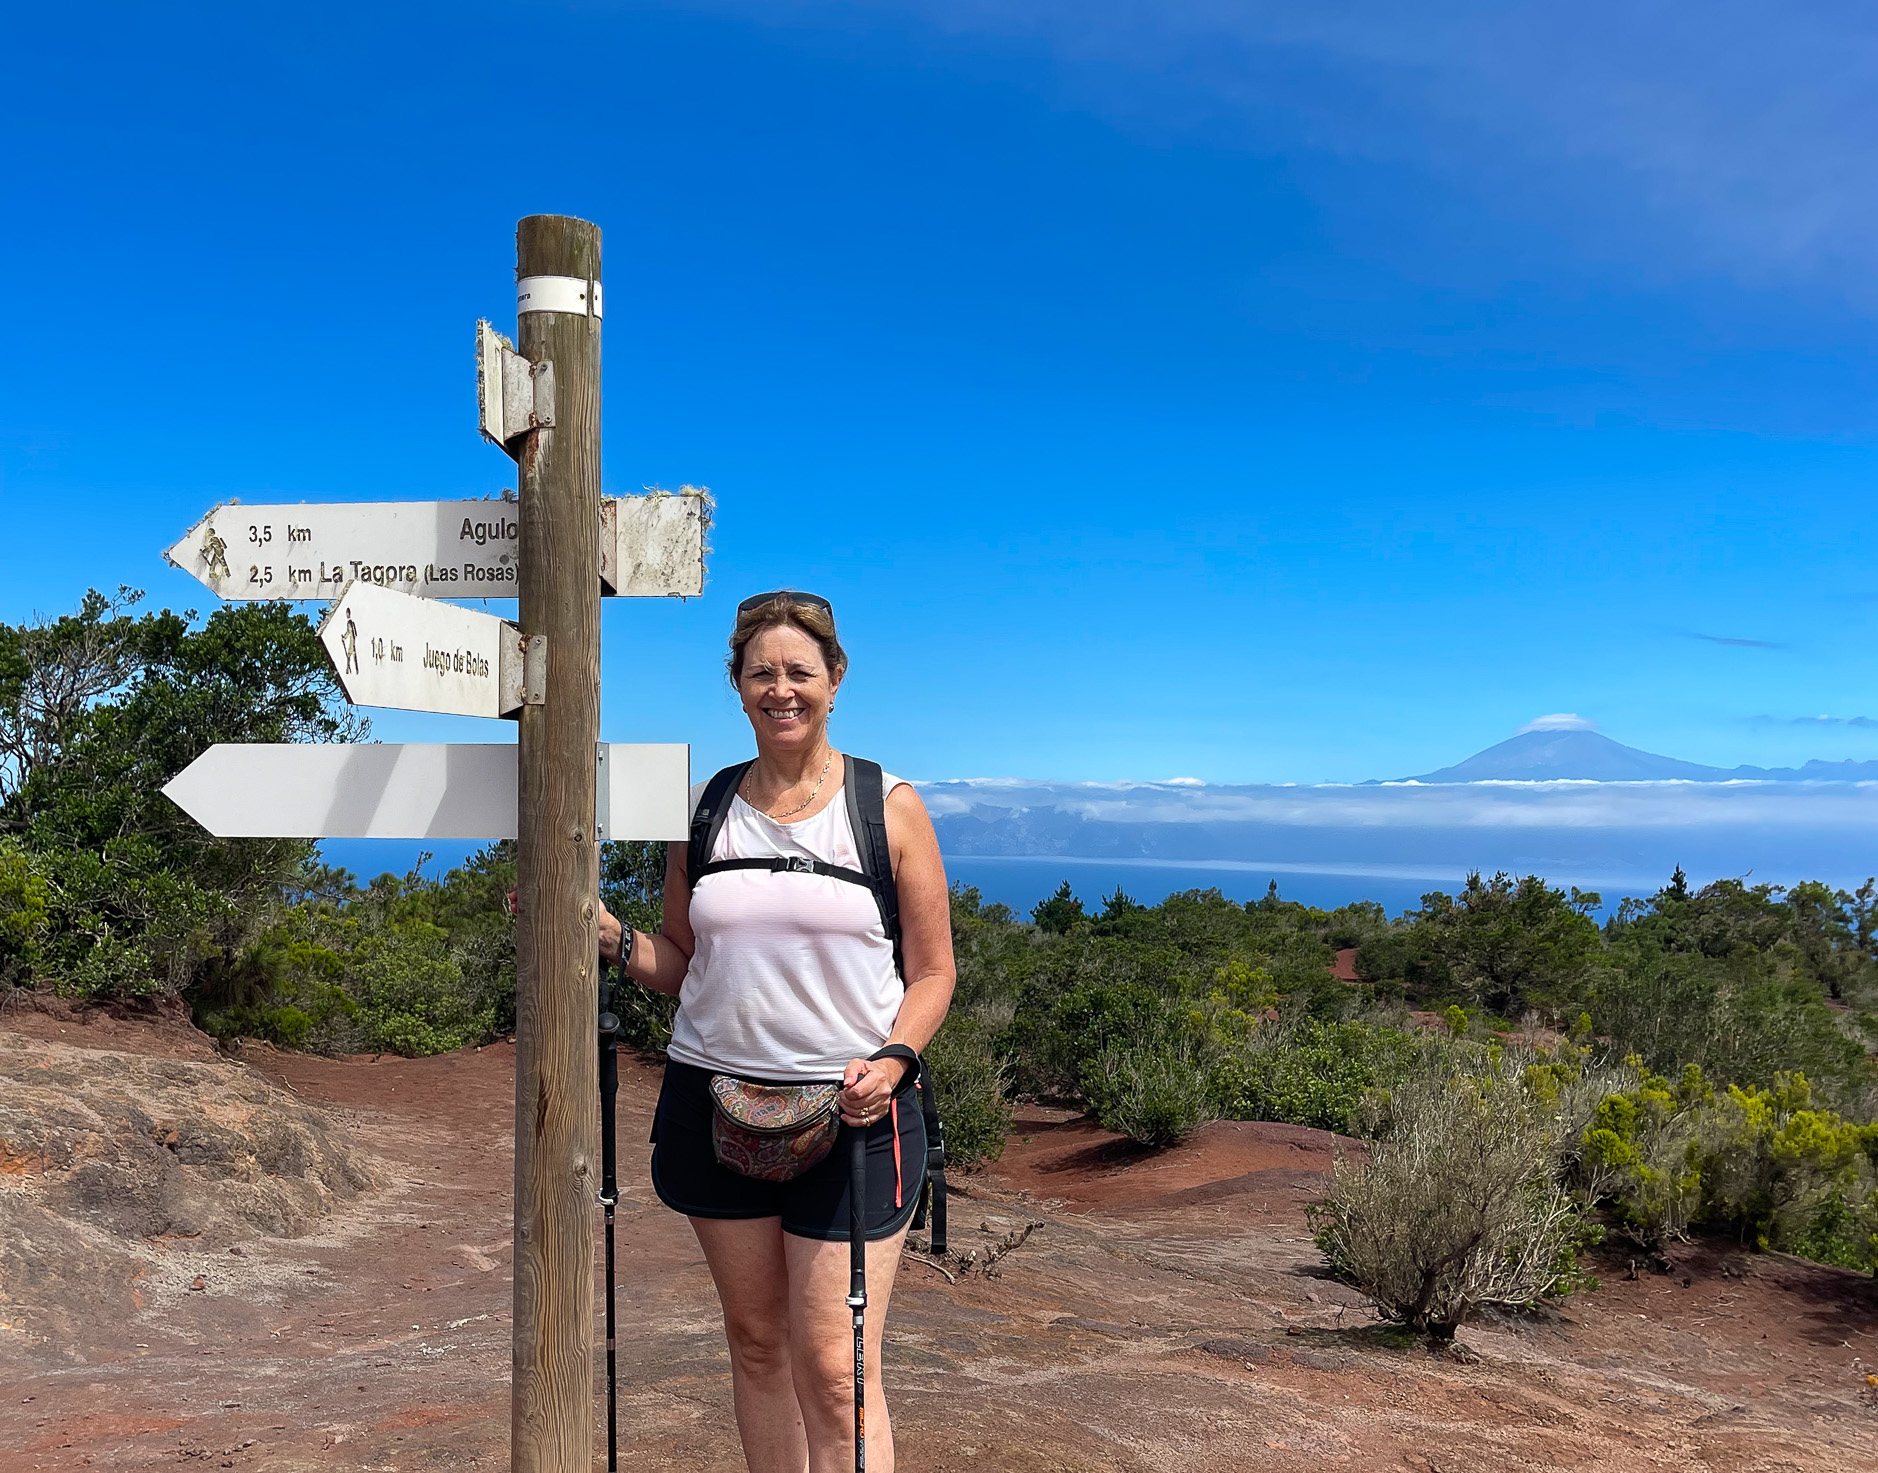 Hiking in La Gomera – a 7 day itinerary